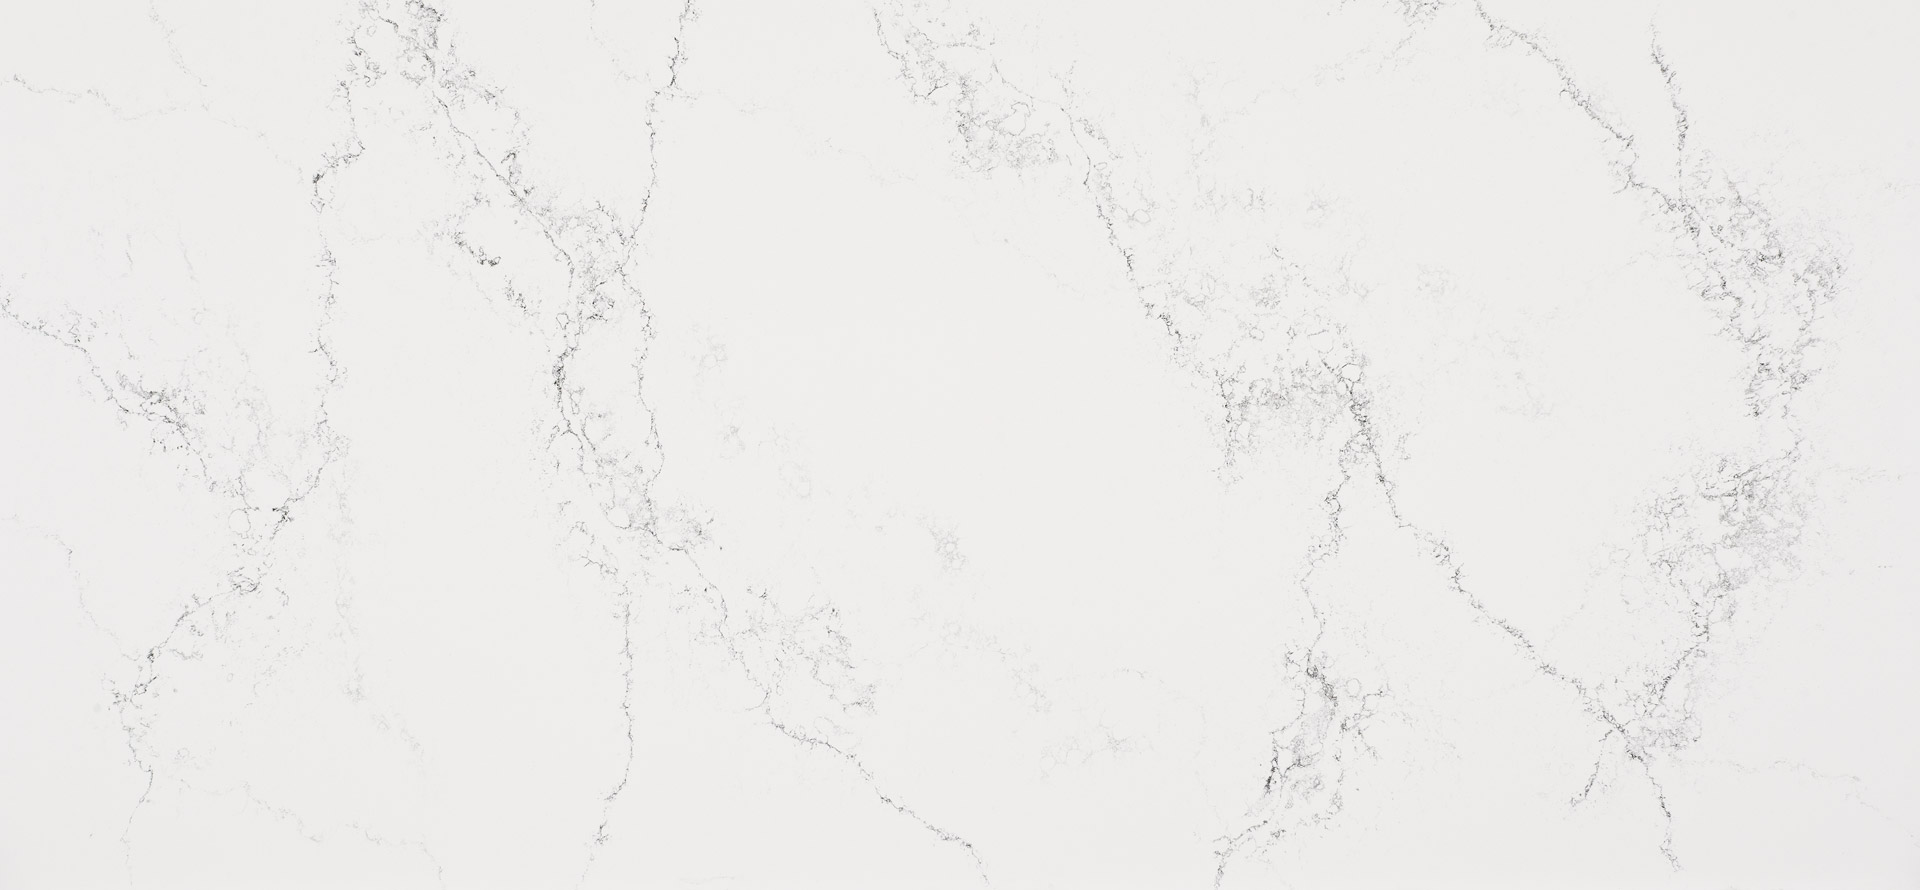 squarerooms-caesarstone-empira-white-marble-quartz-counter-kitchen-surface-texture